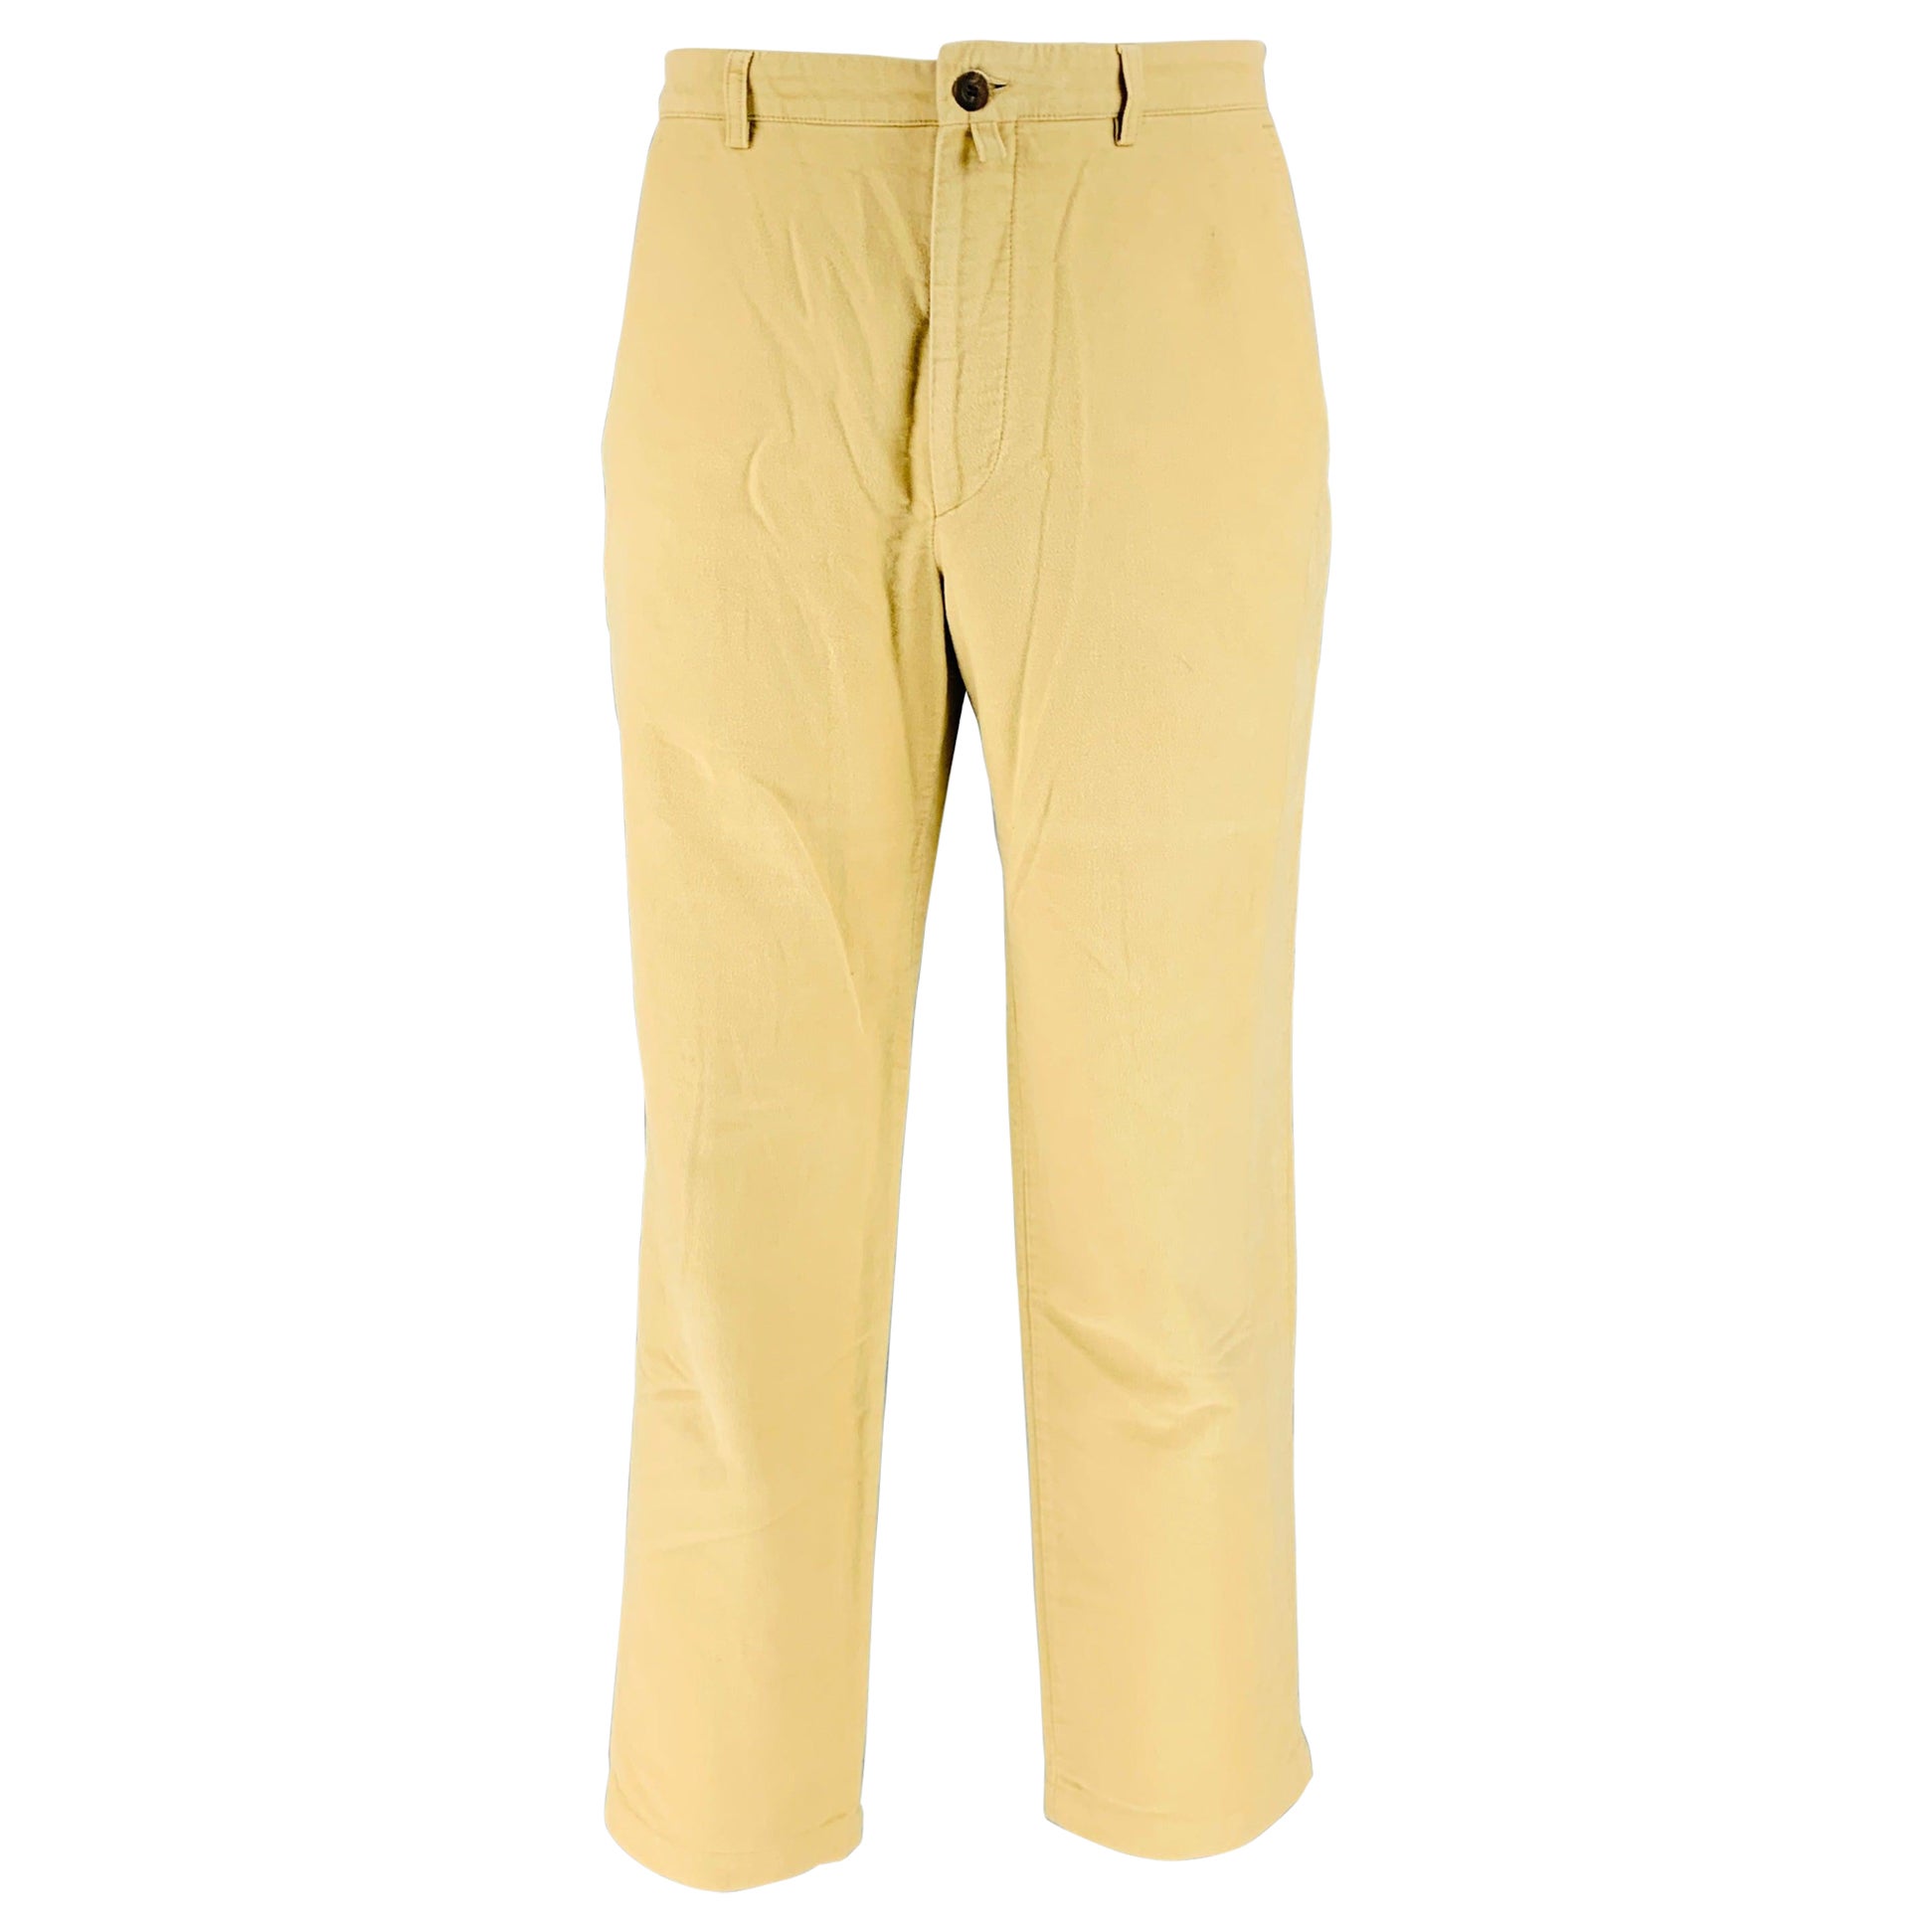 DRIES VAN NOTEN Size 34 Beige Cotton Flat Front Casual Pants For Sale